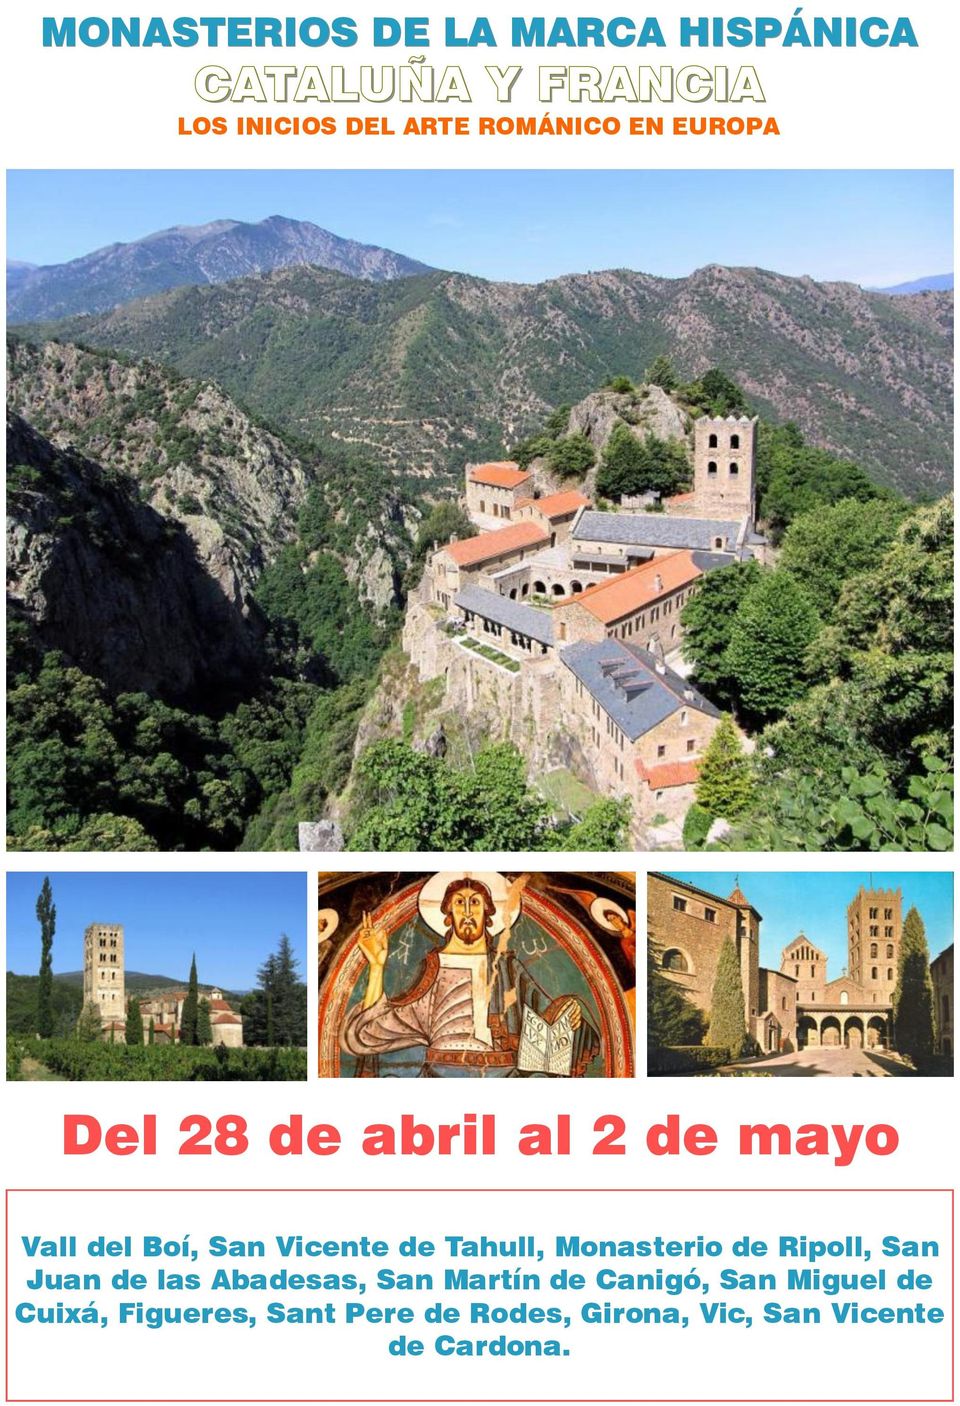 Tahull, Monasterio de Ripoll, San Juan de las Abadesas, San Martín de Canigó,